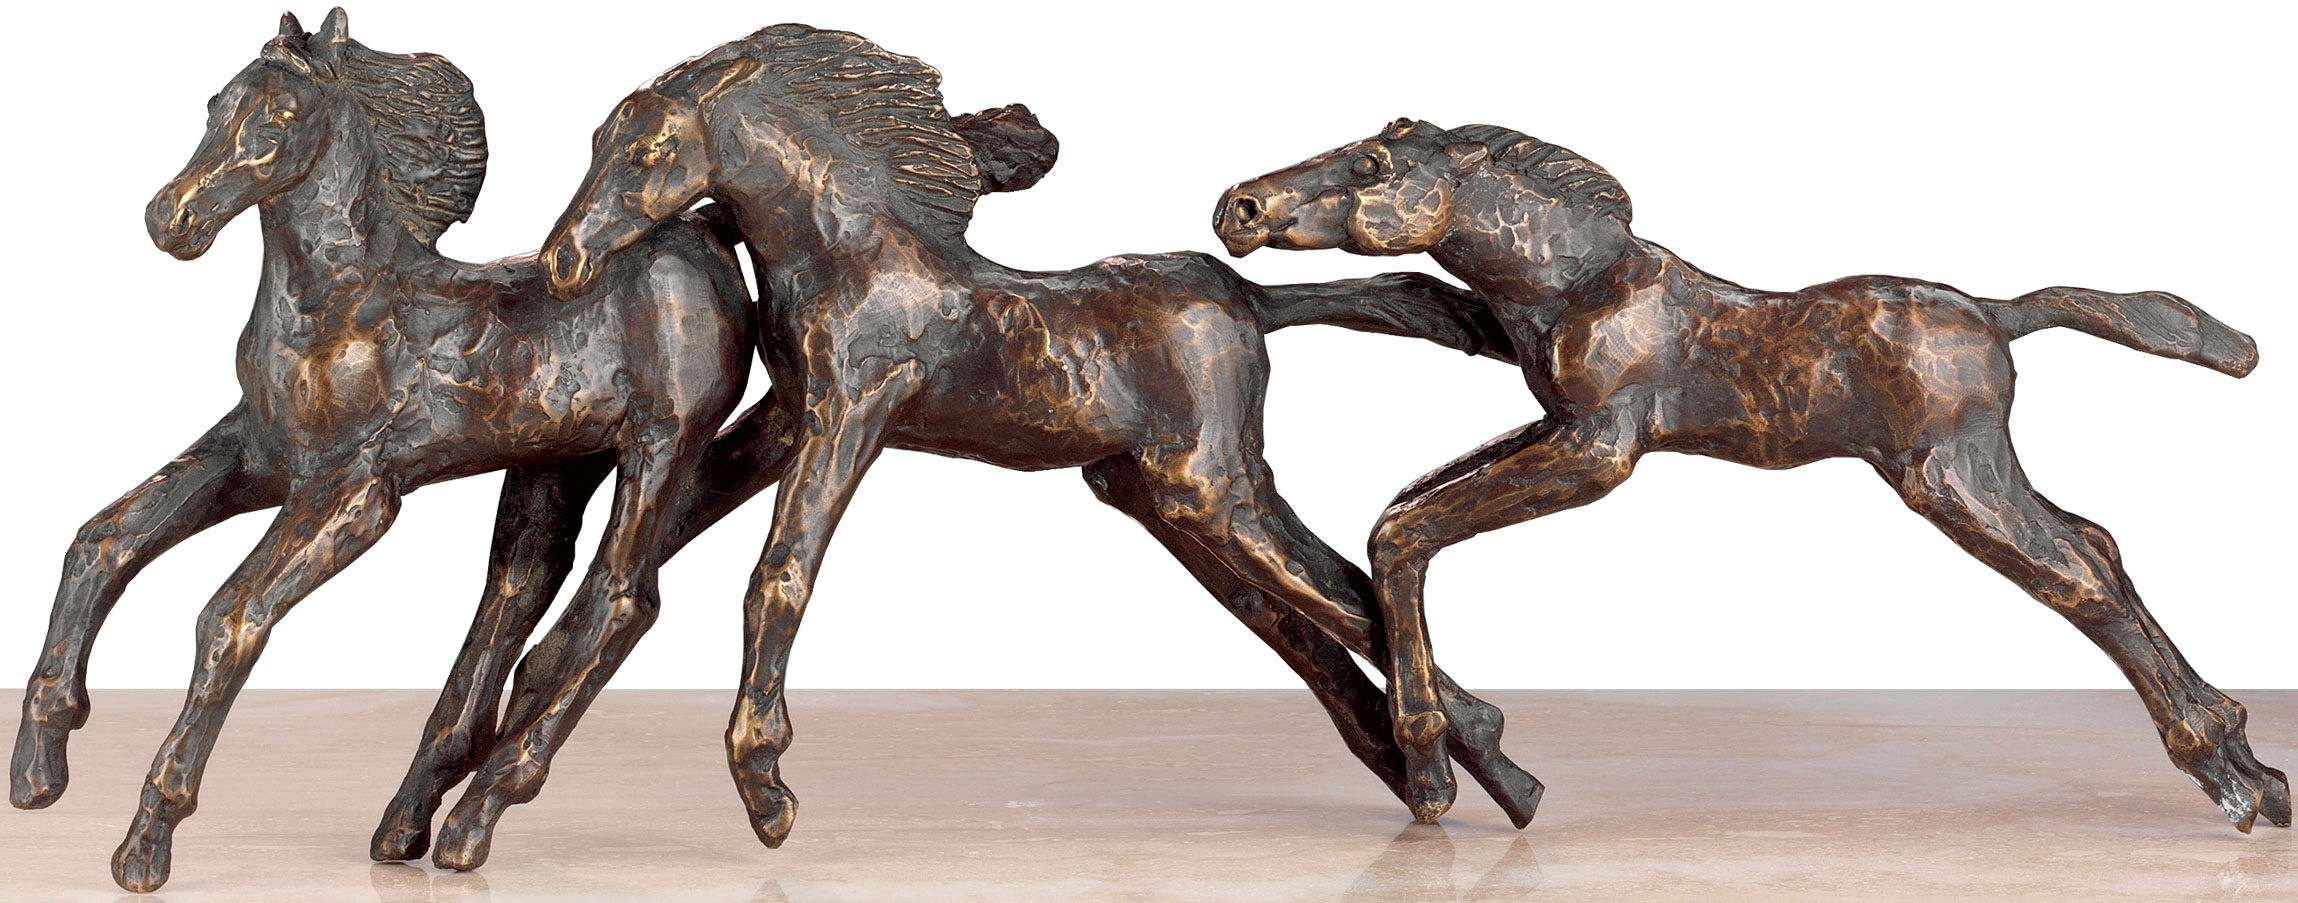 Sculptural group "Three Foals in Spring", bronze by Kurt Arentz